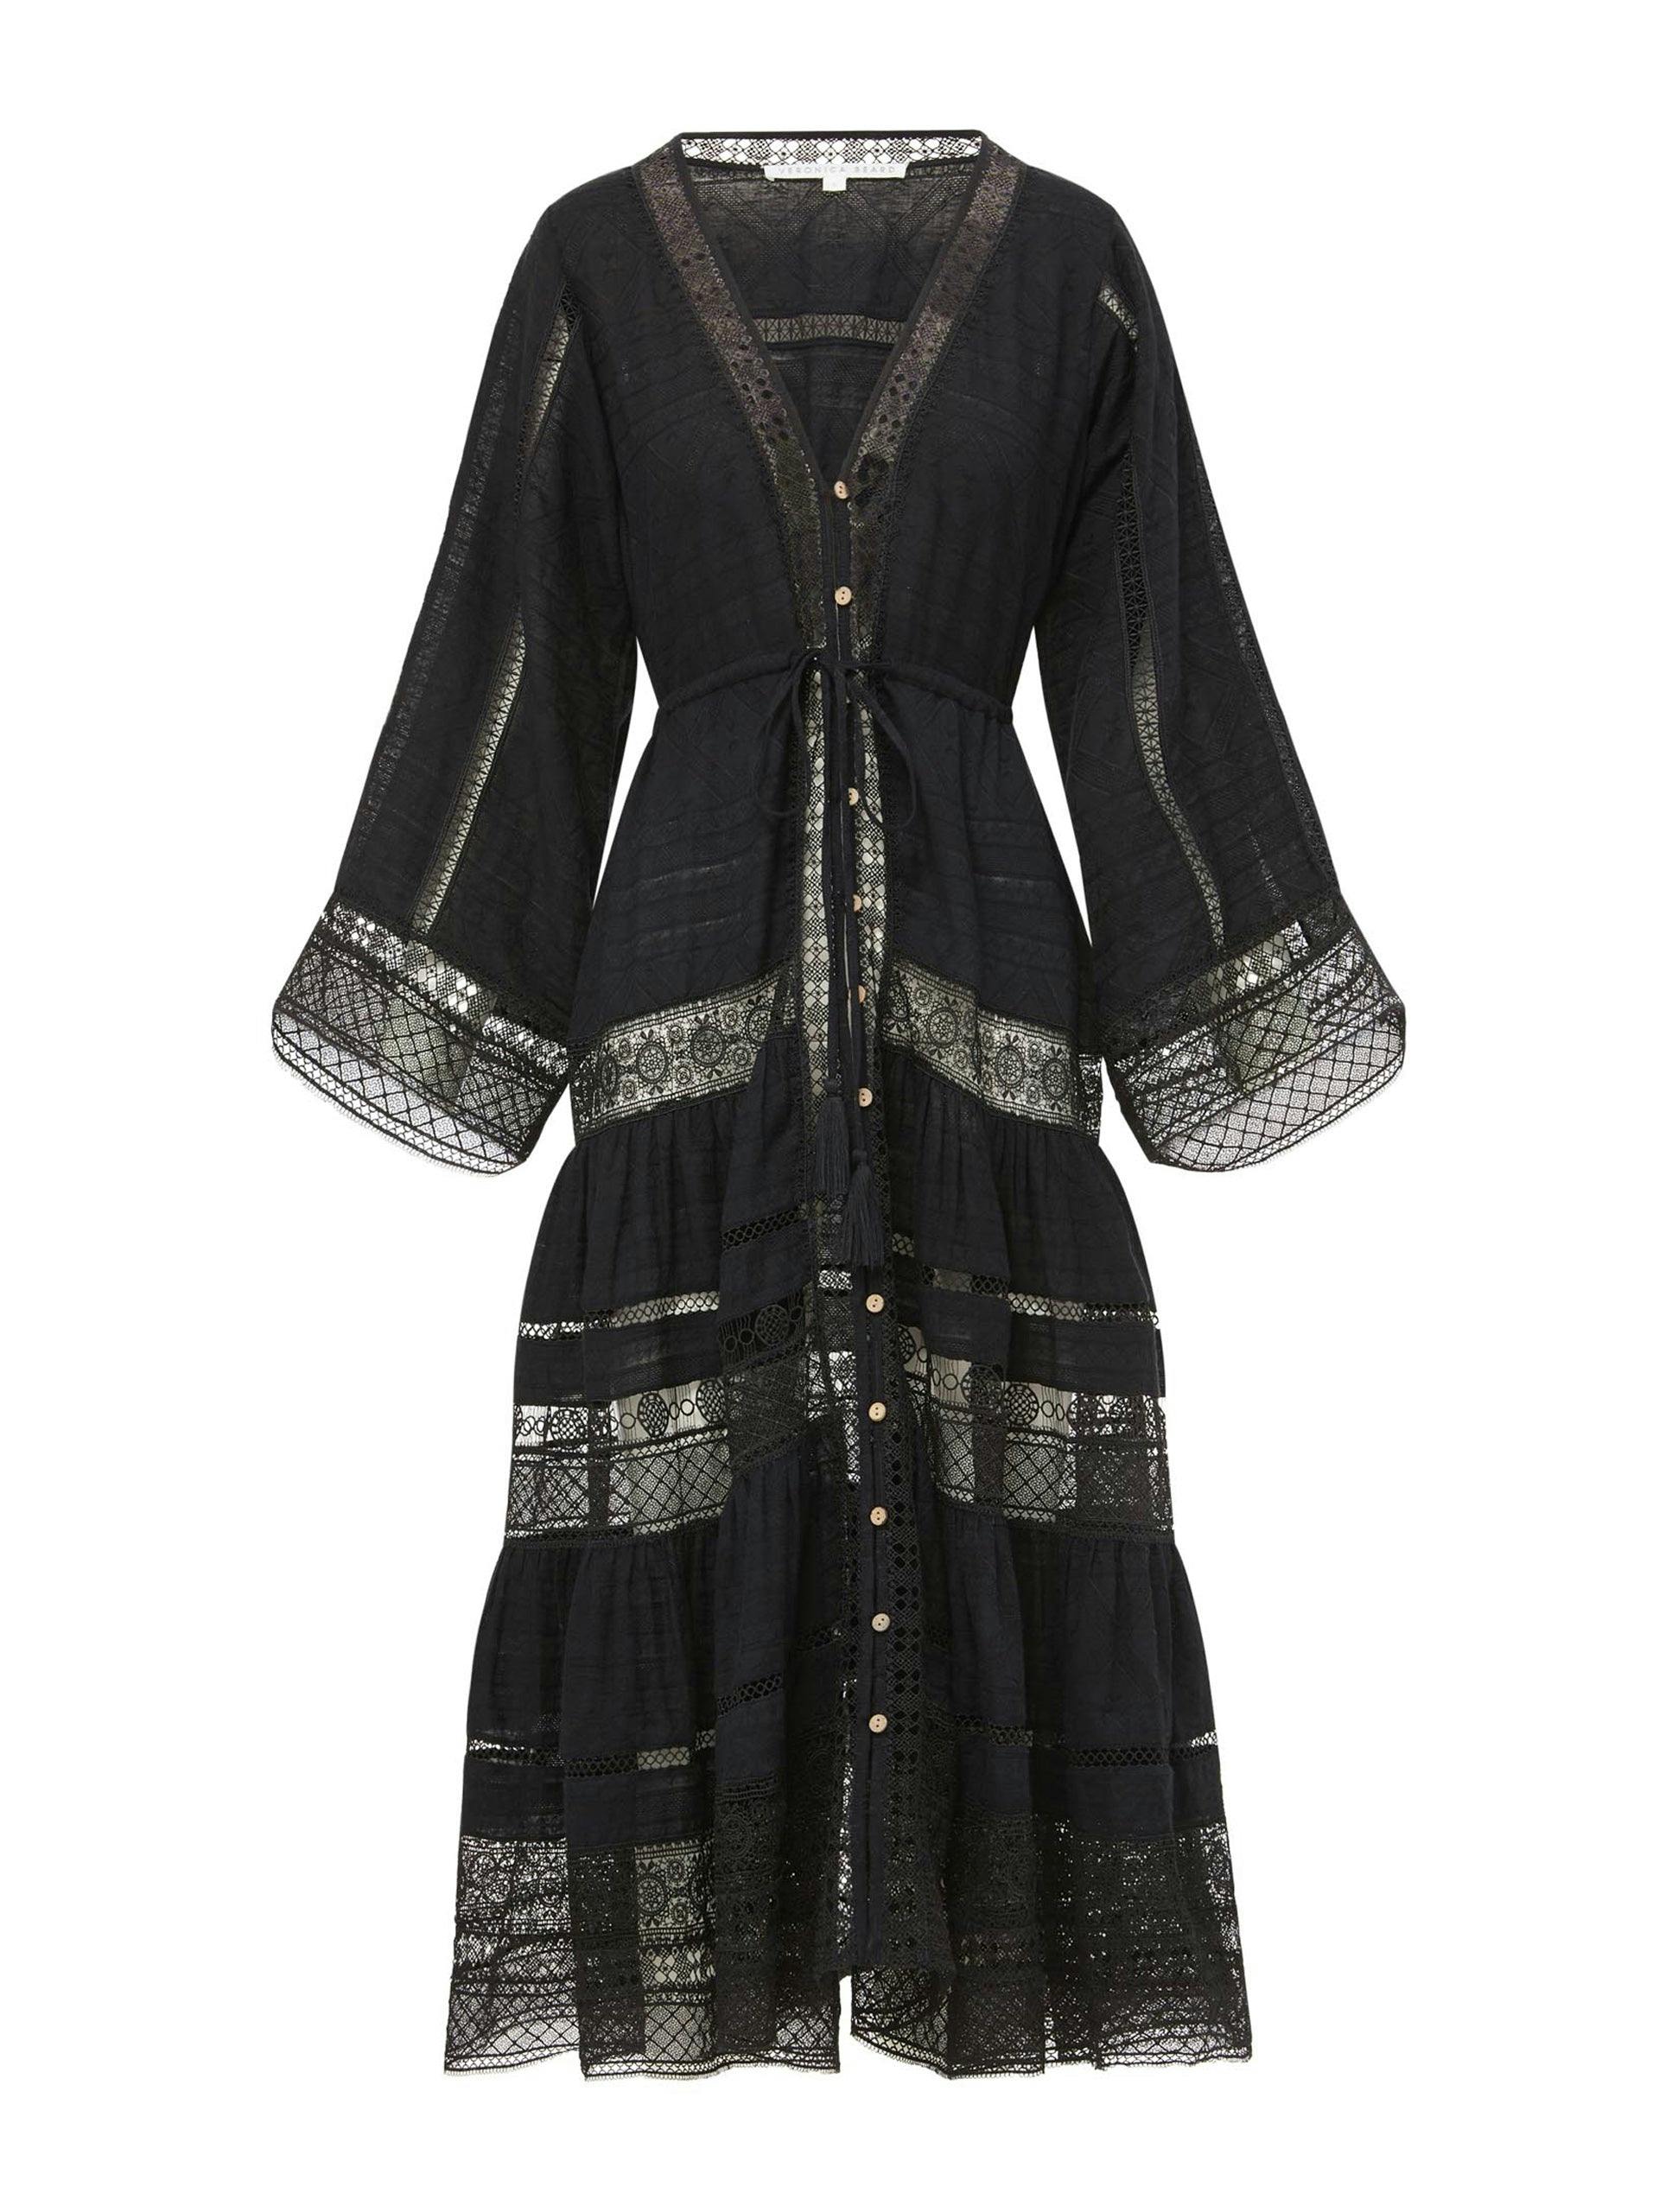 Black v-neck cotton dress